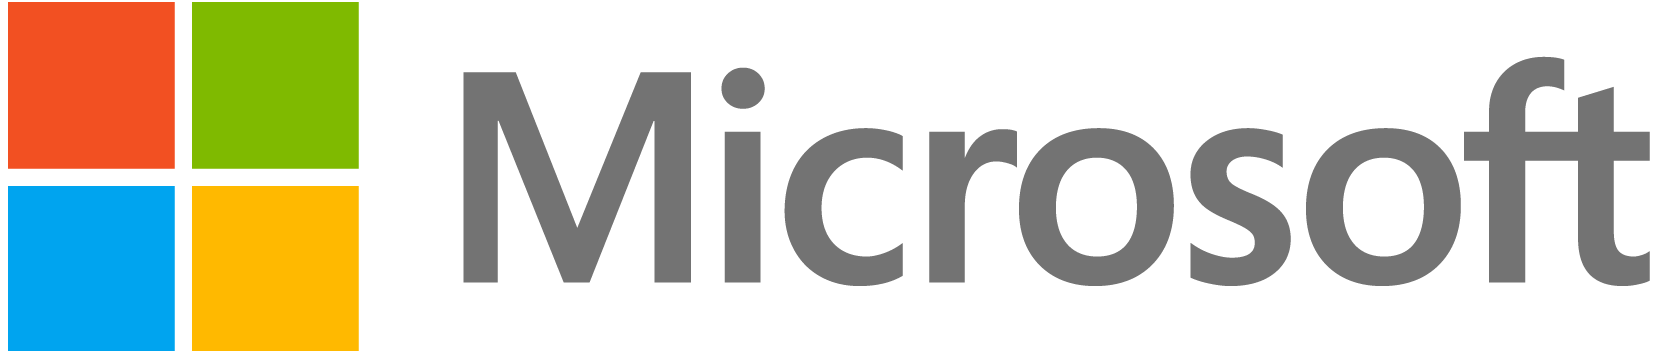 Microsoft - ICCP 2015 Silver Level Sponsor